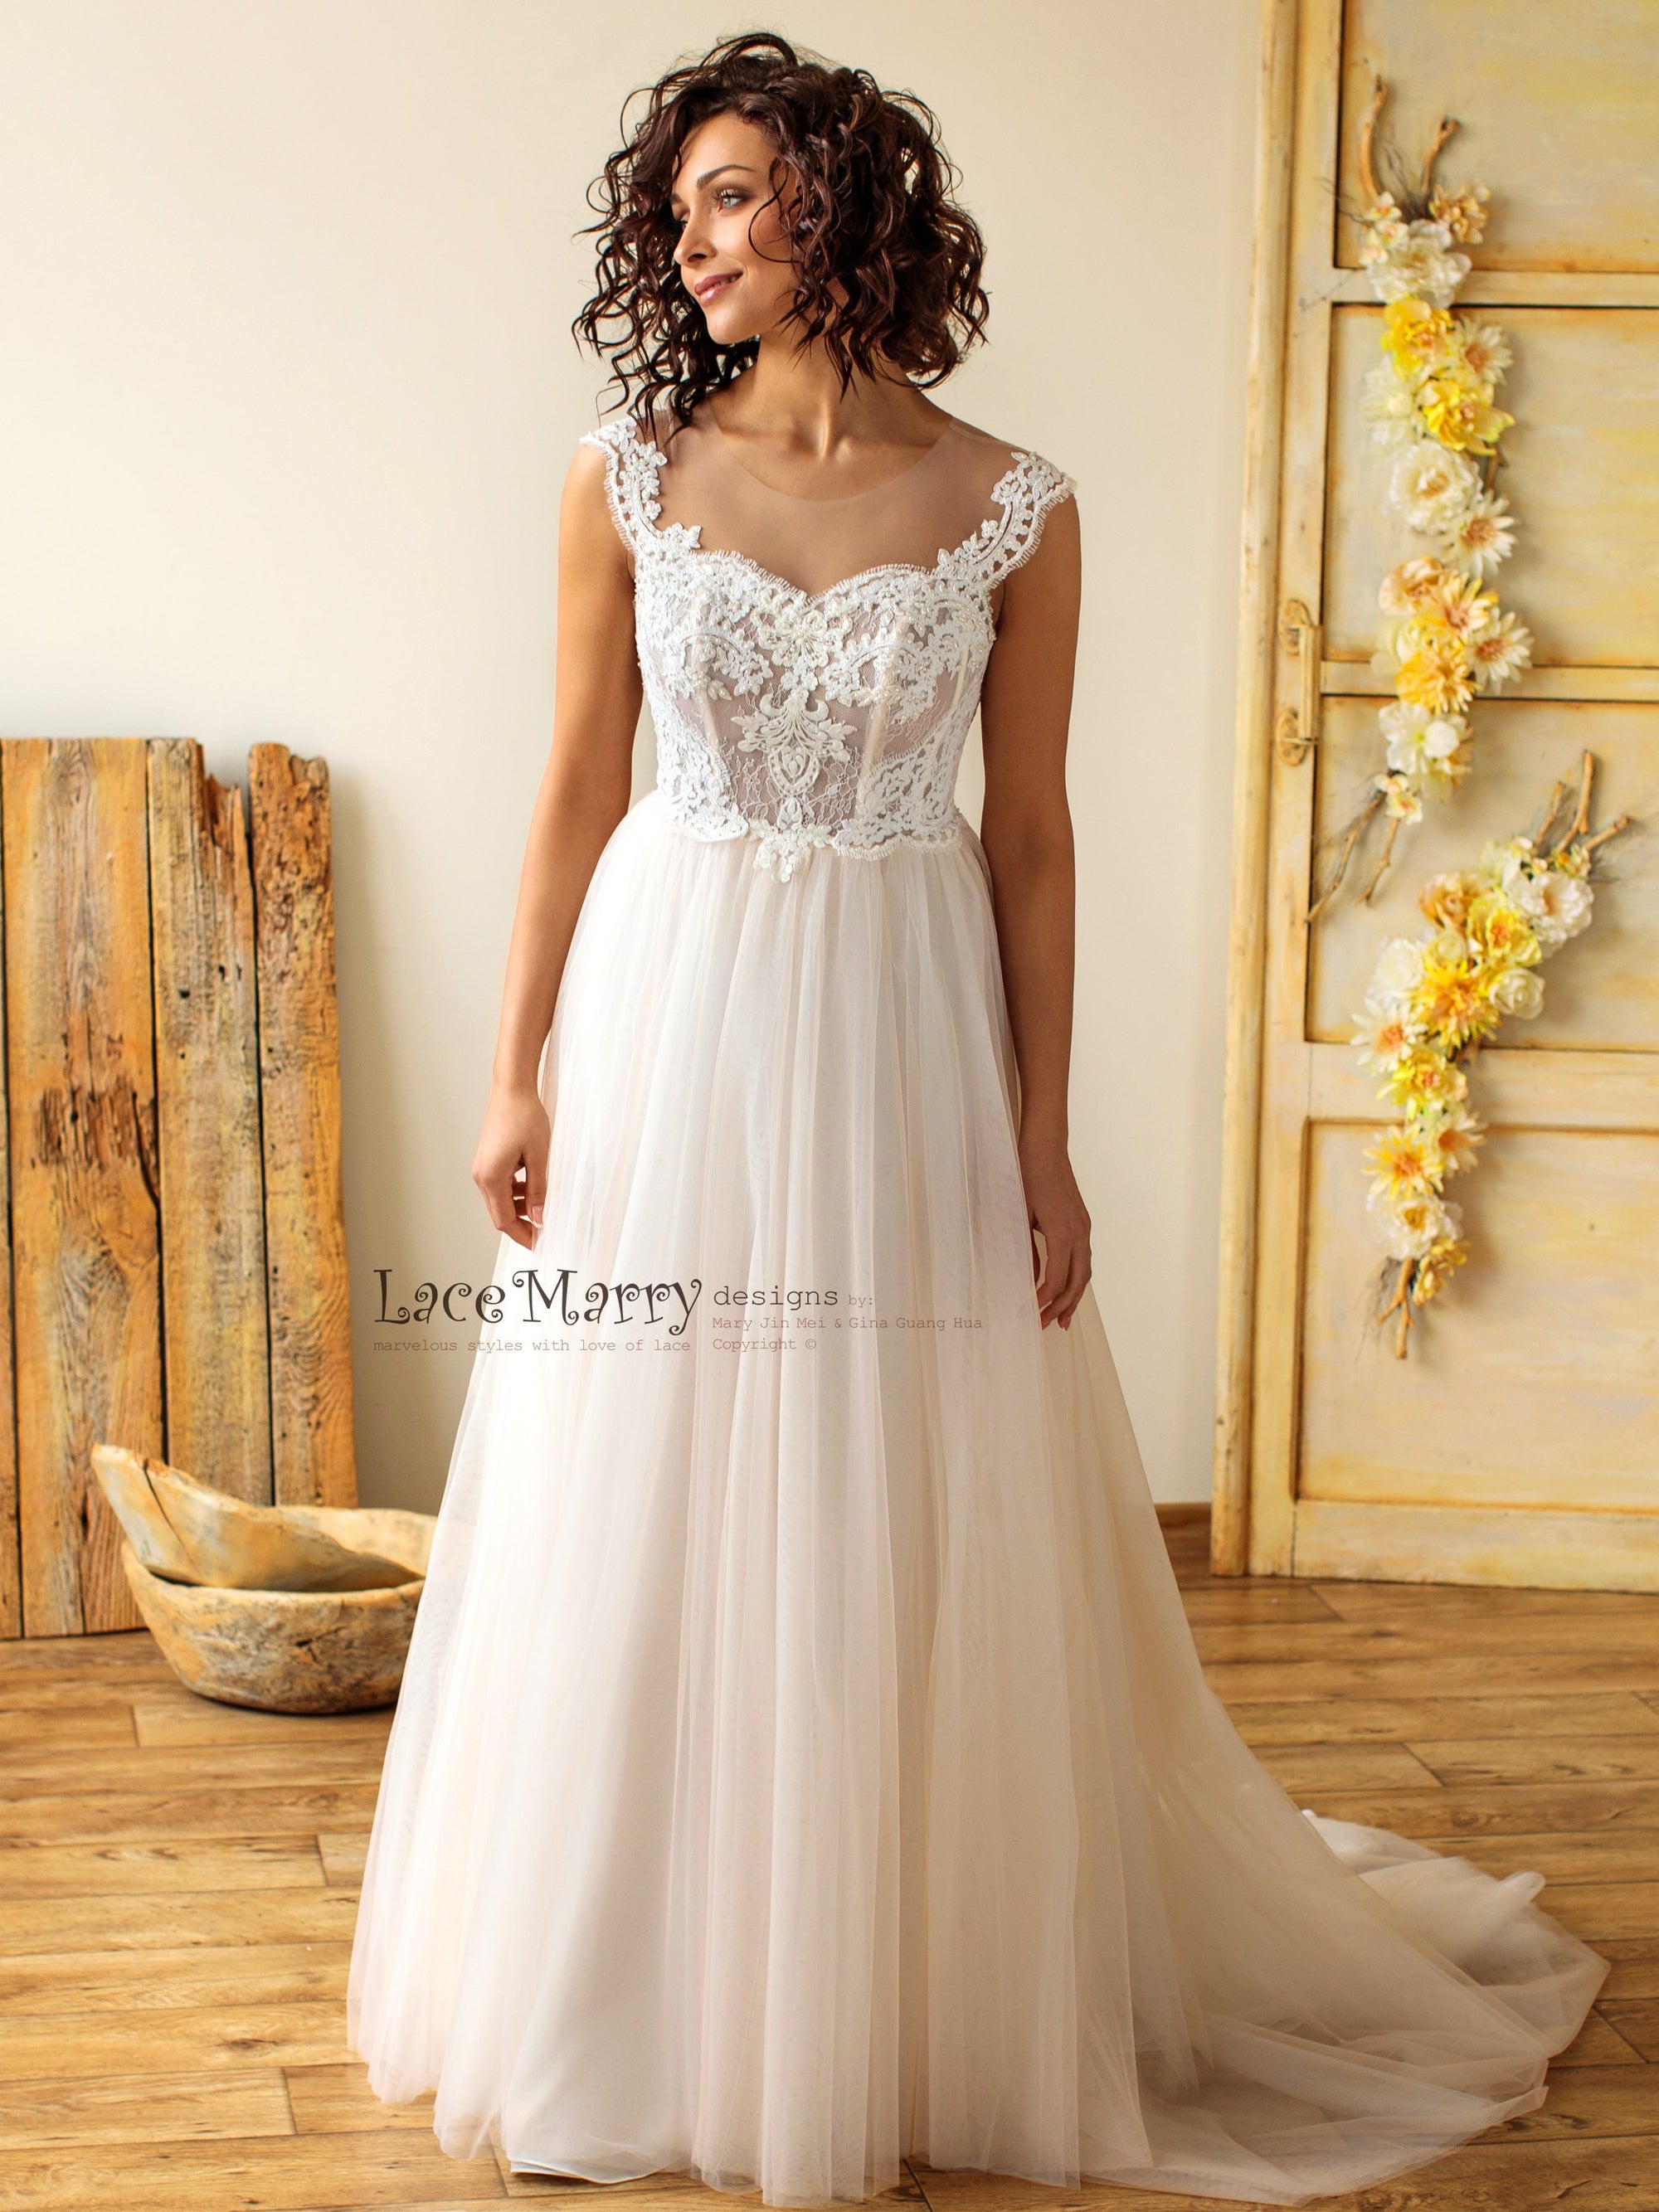 A Line Boho Wedding Dress with Light and Flowy Skirt